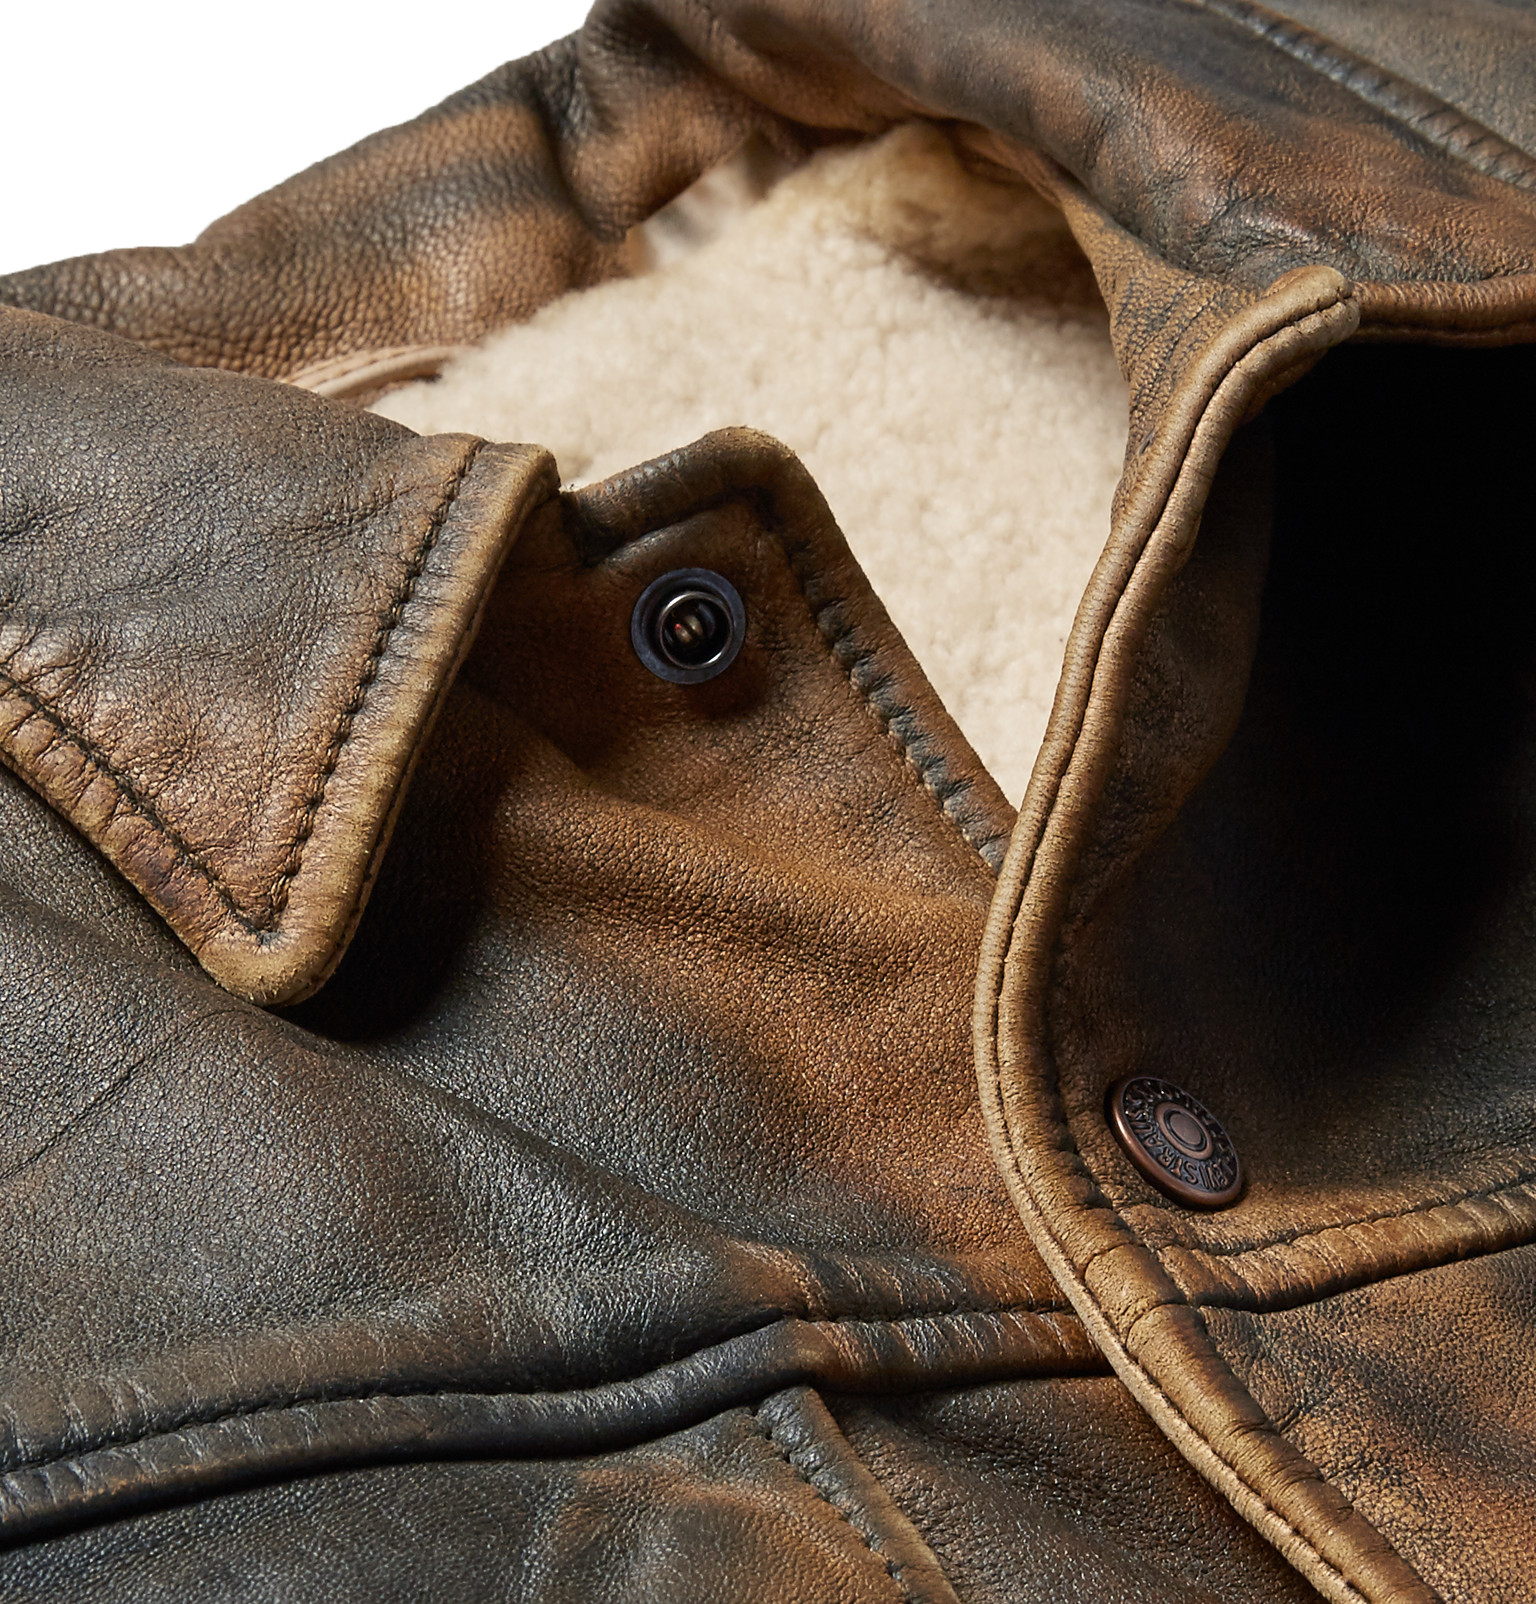 levis leather trucker jacket buff rustic